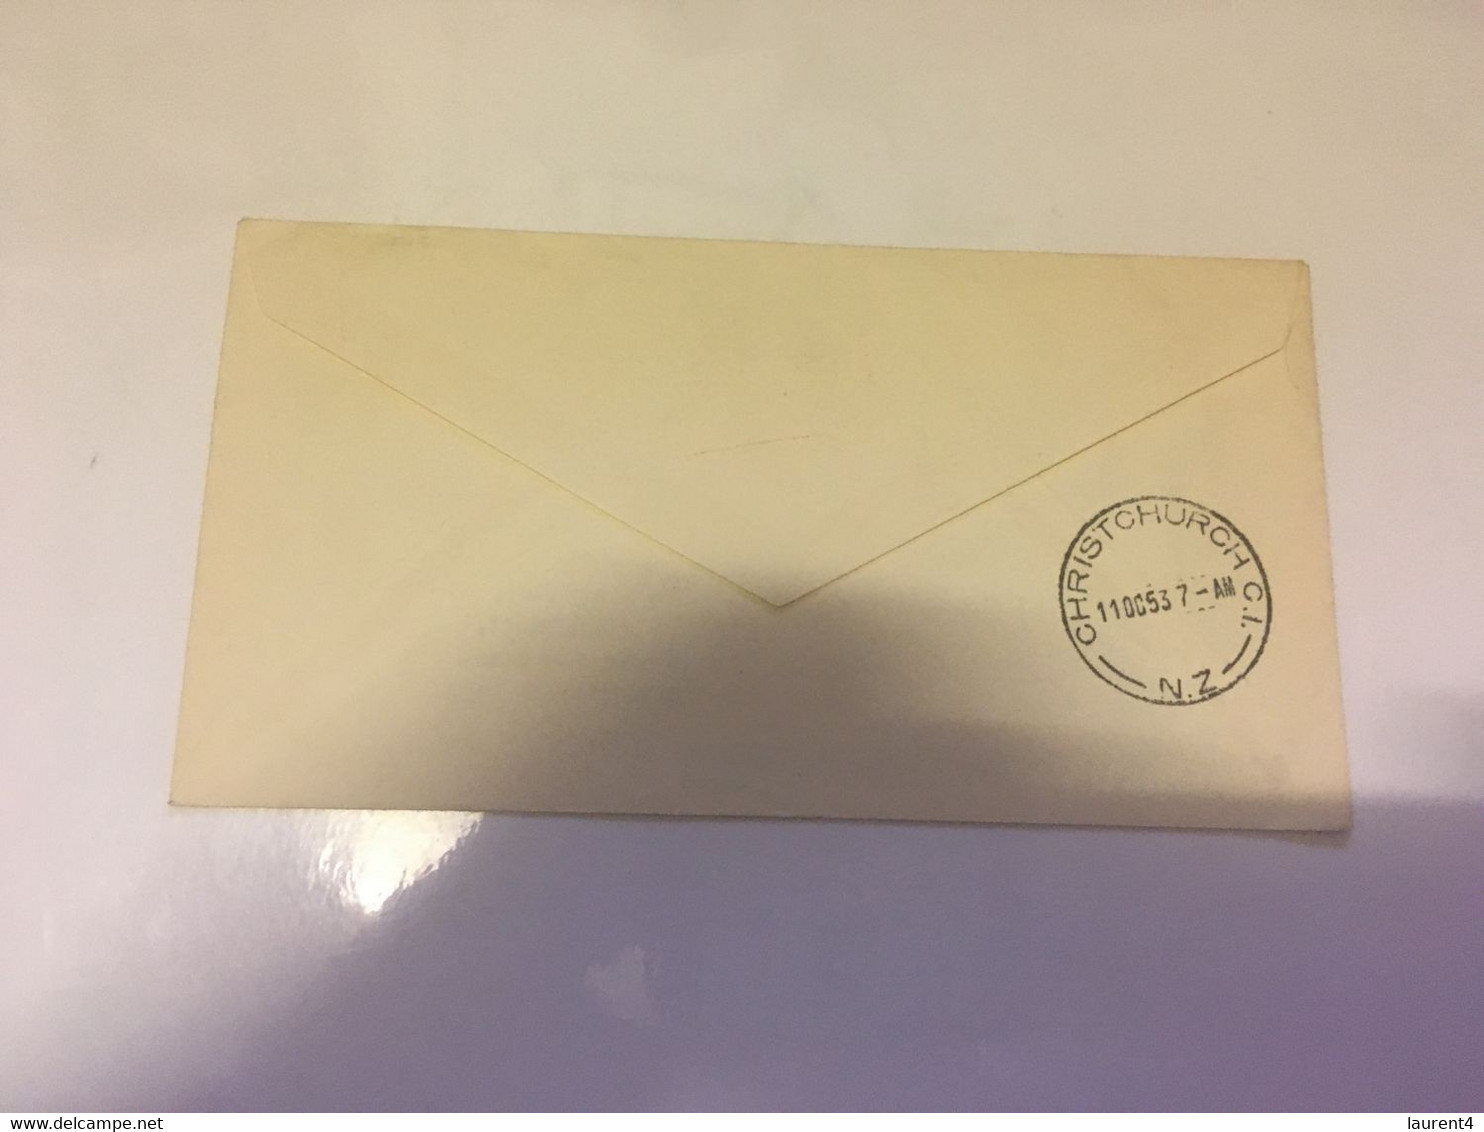 (2 H 26) New Zealand - Christchurch Air Race - 1952 - With Netherlands Stamps - Cartas & Documentos